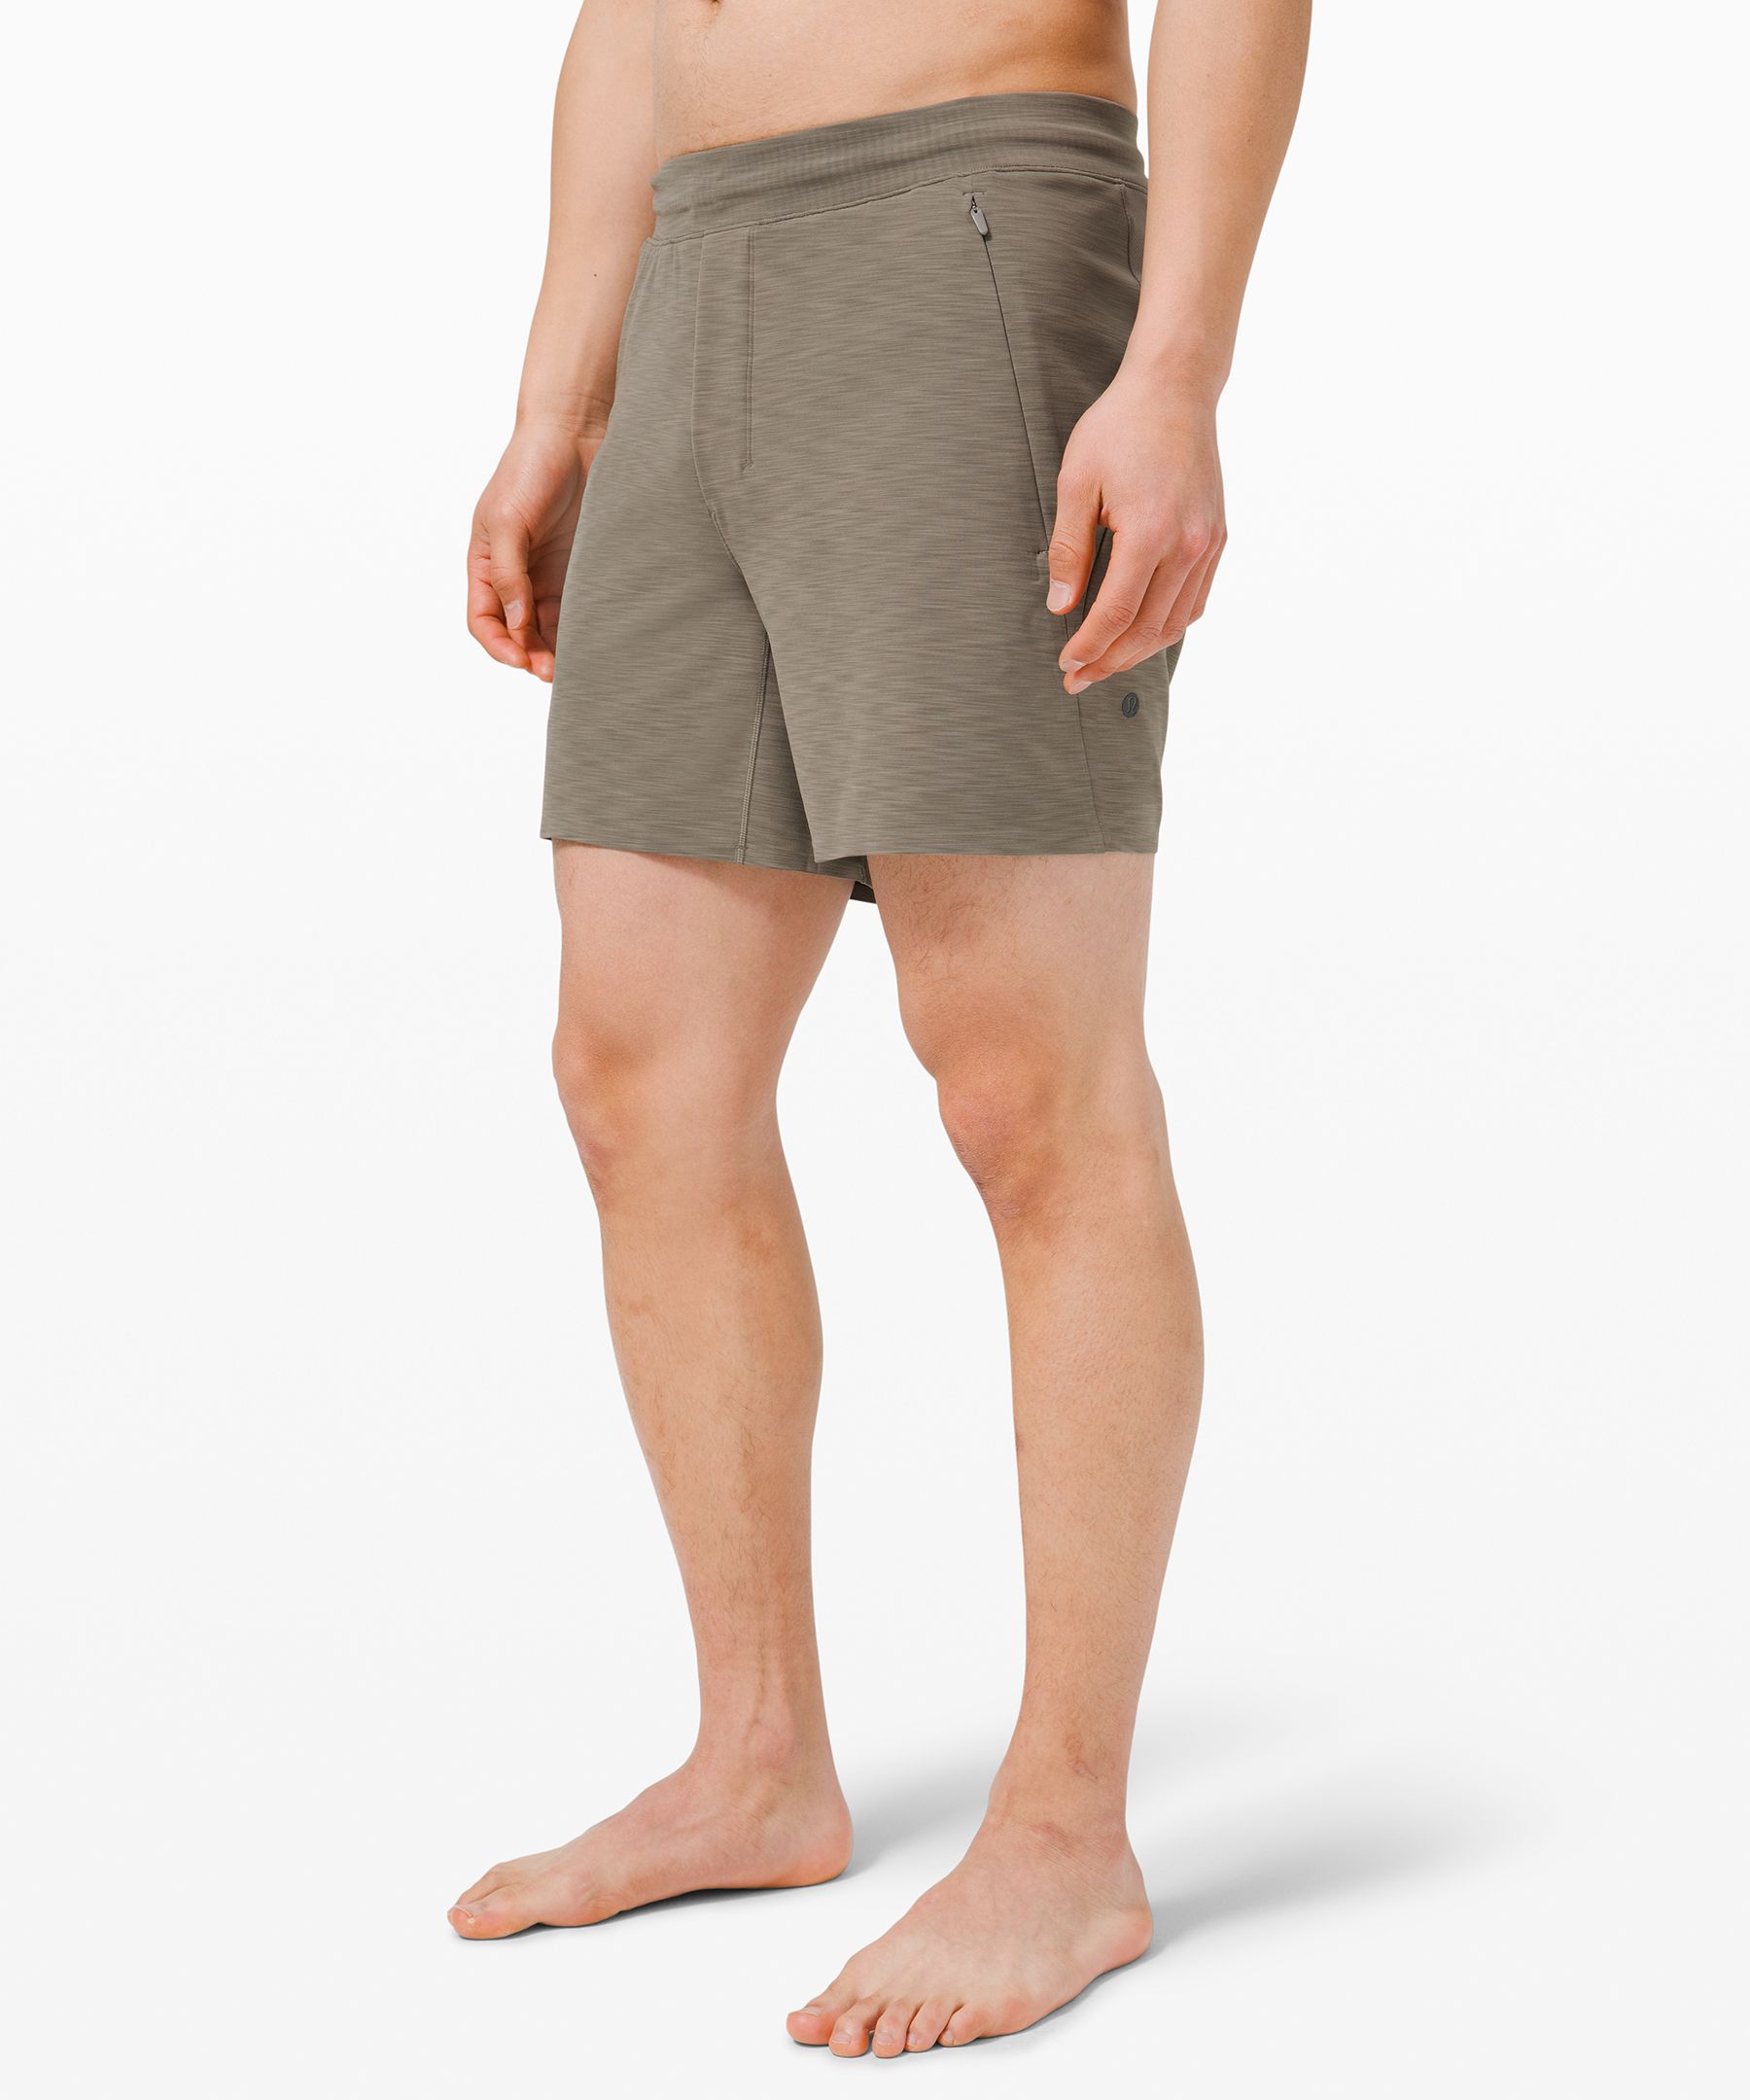 lululemon look alike shorts